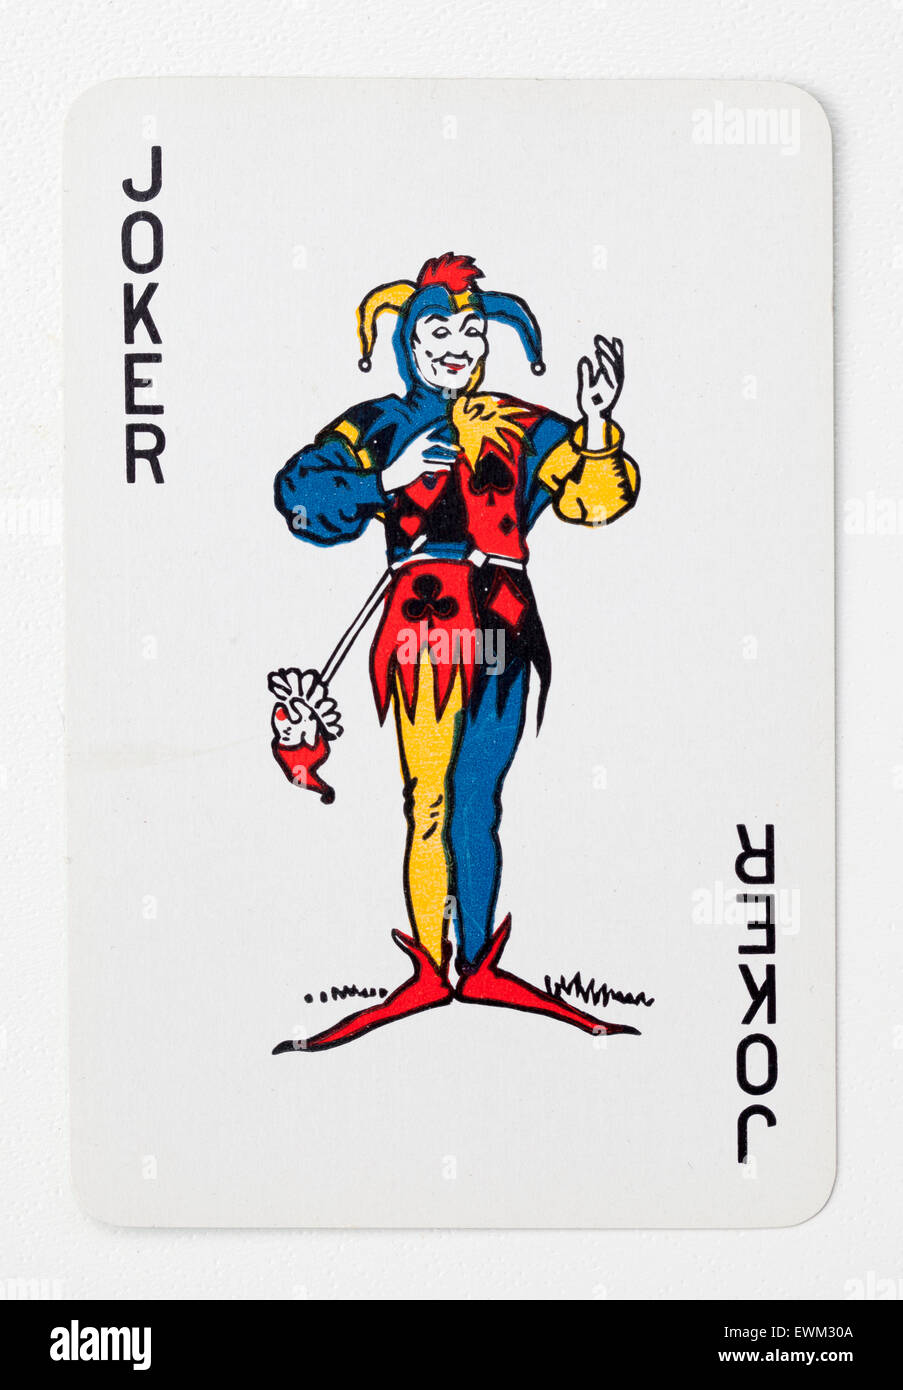 Joker Playing Card Stock Photo - Alamy